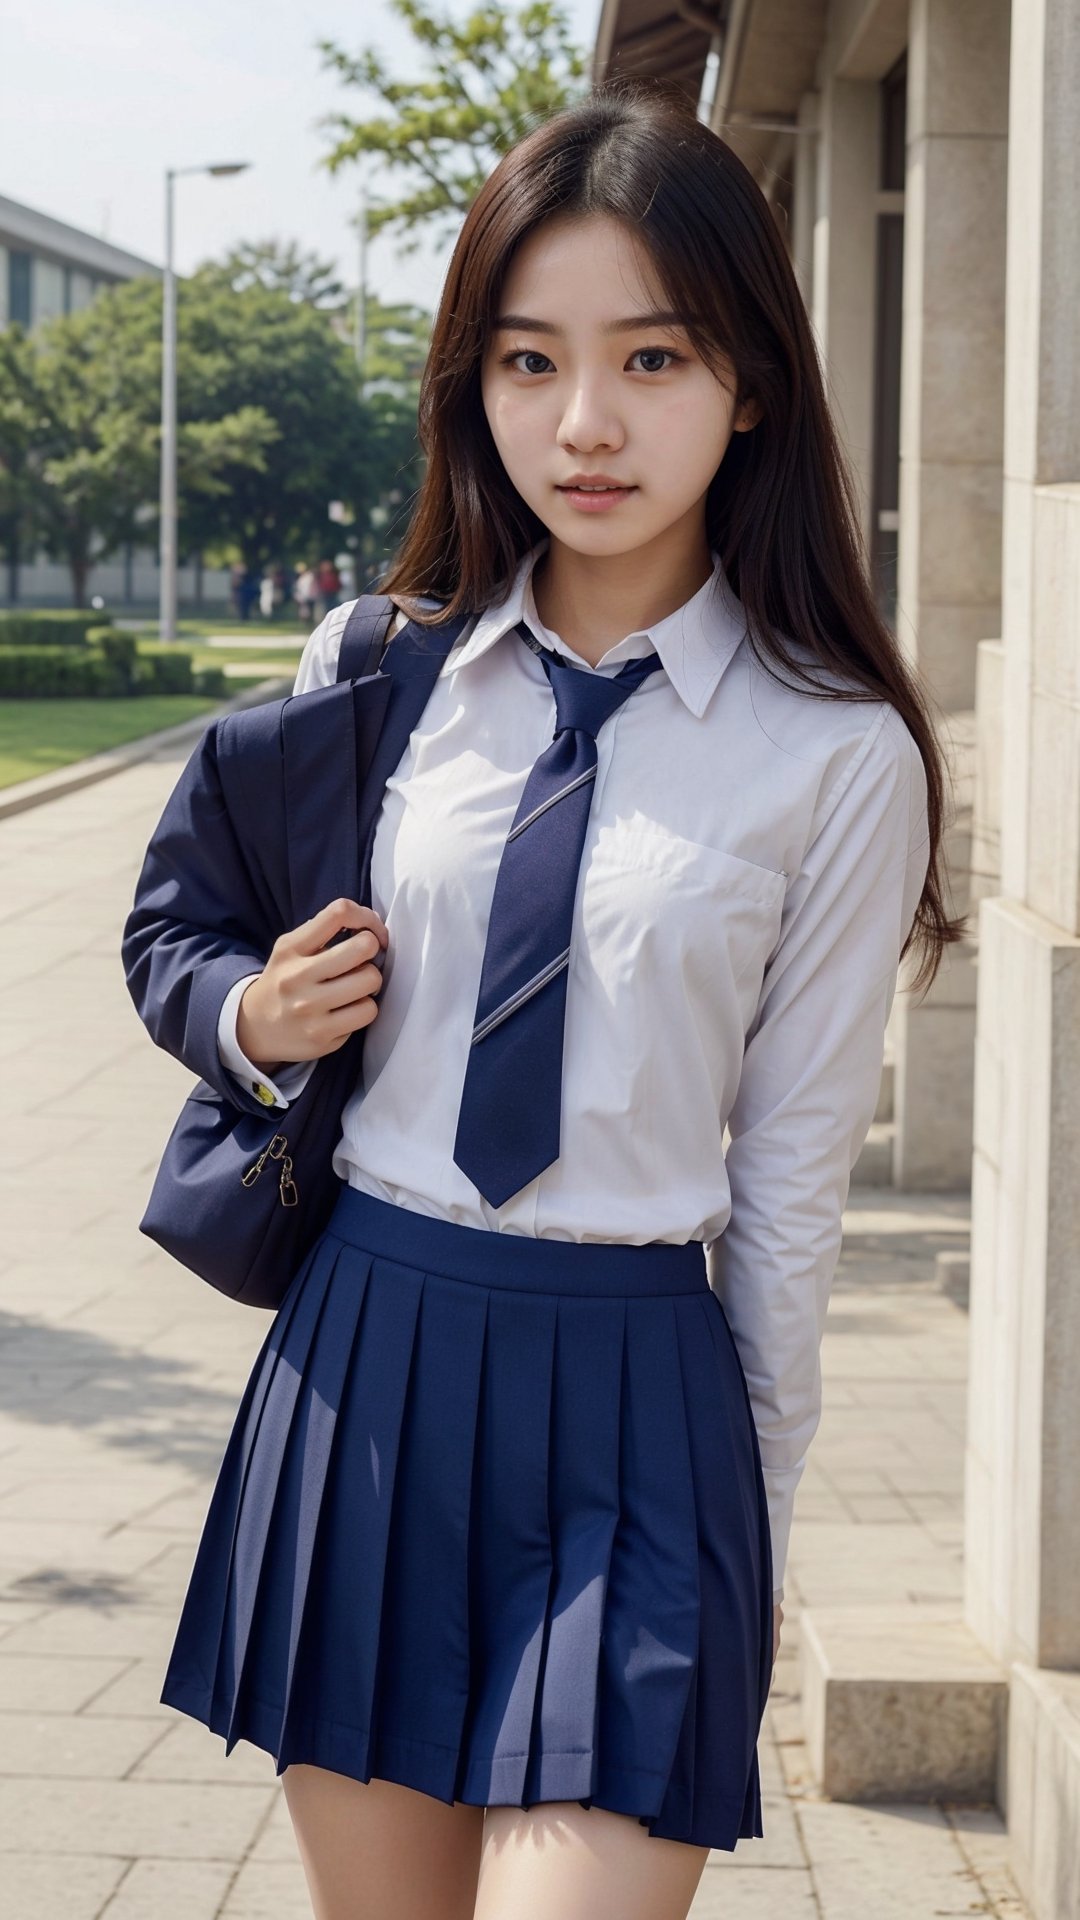 school uniform,
korean university student,
goddess,
21 years old